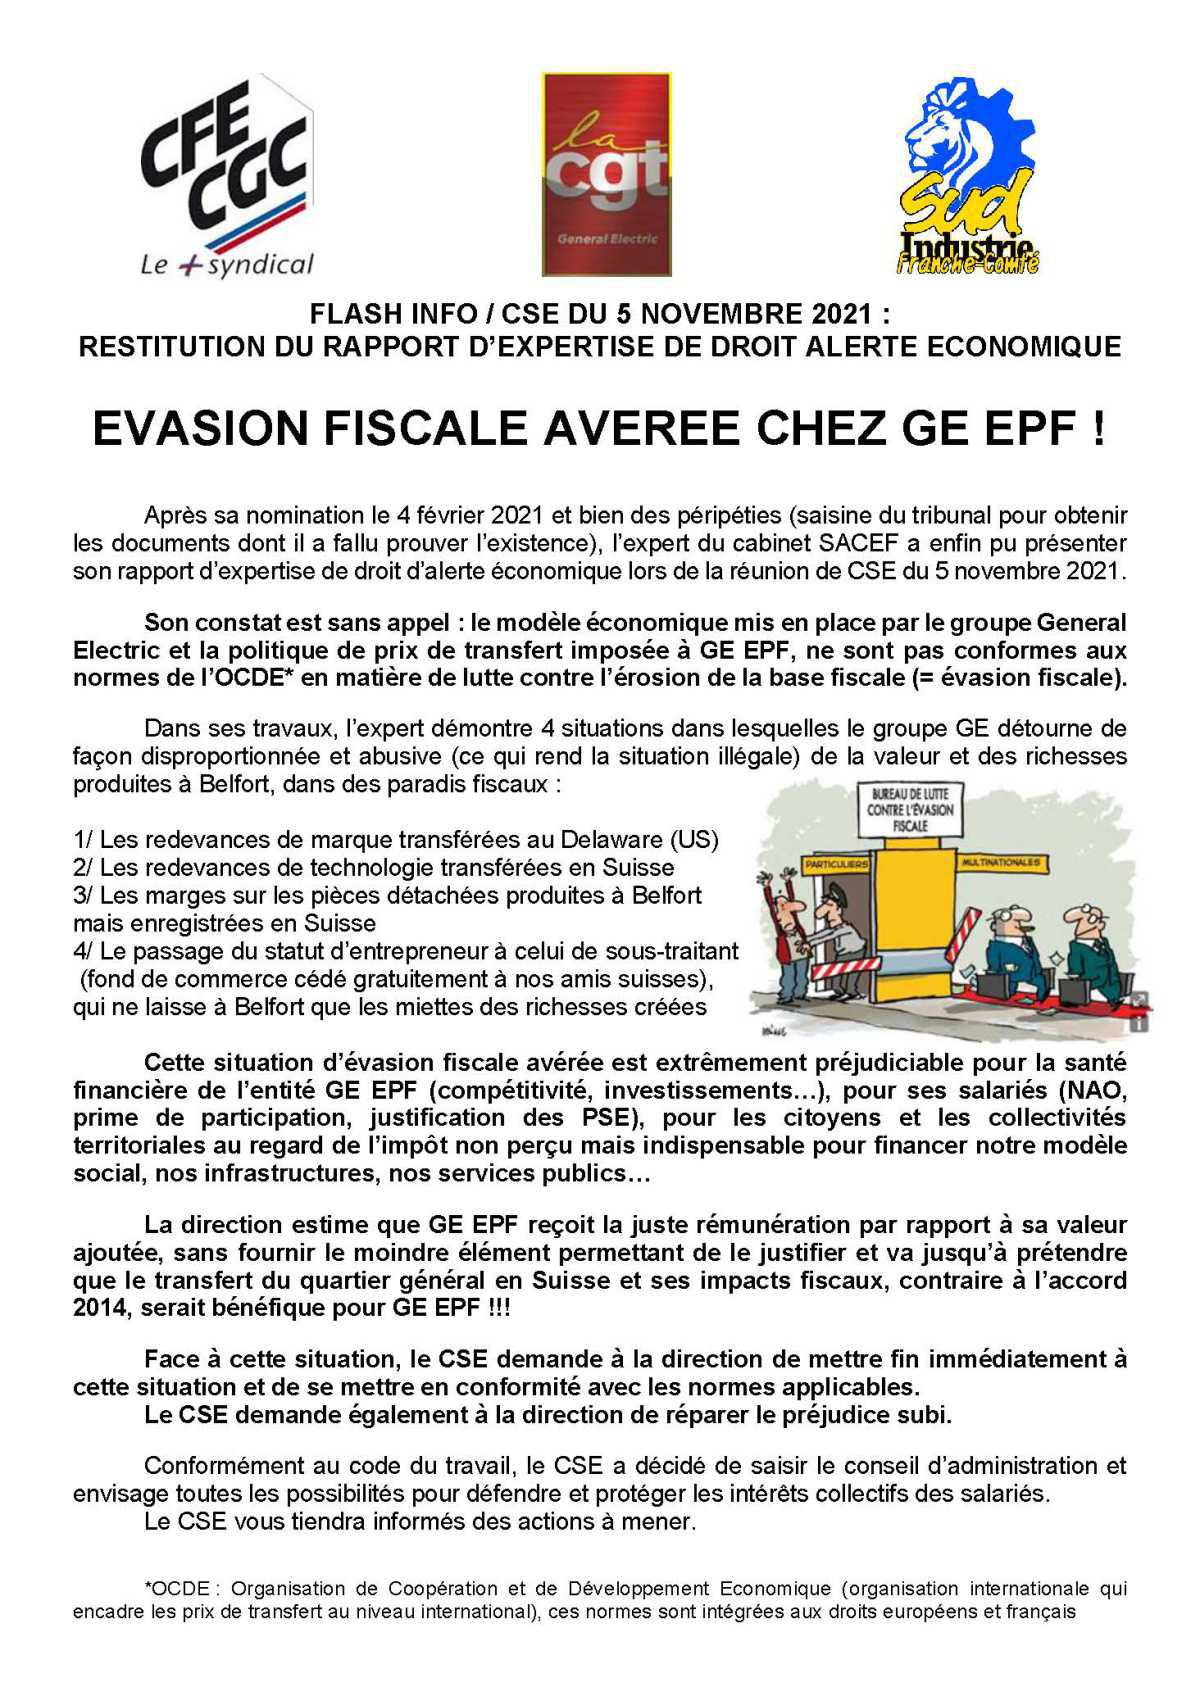 Evasion fiscale avérée chez GE EPF